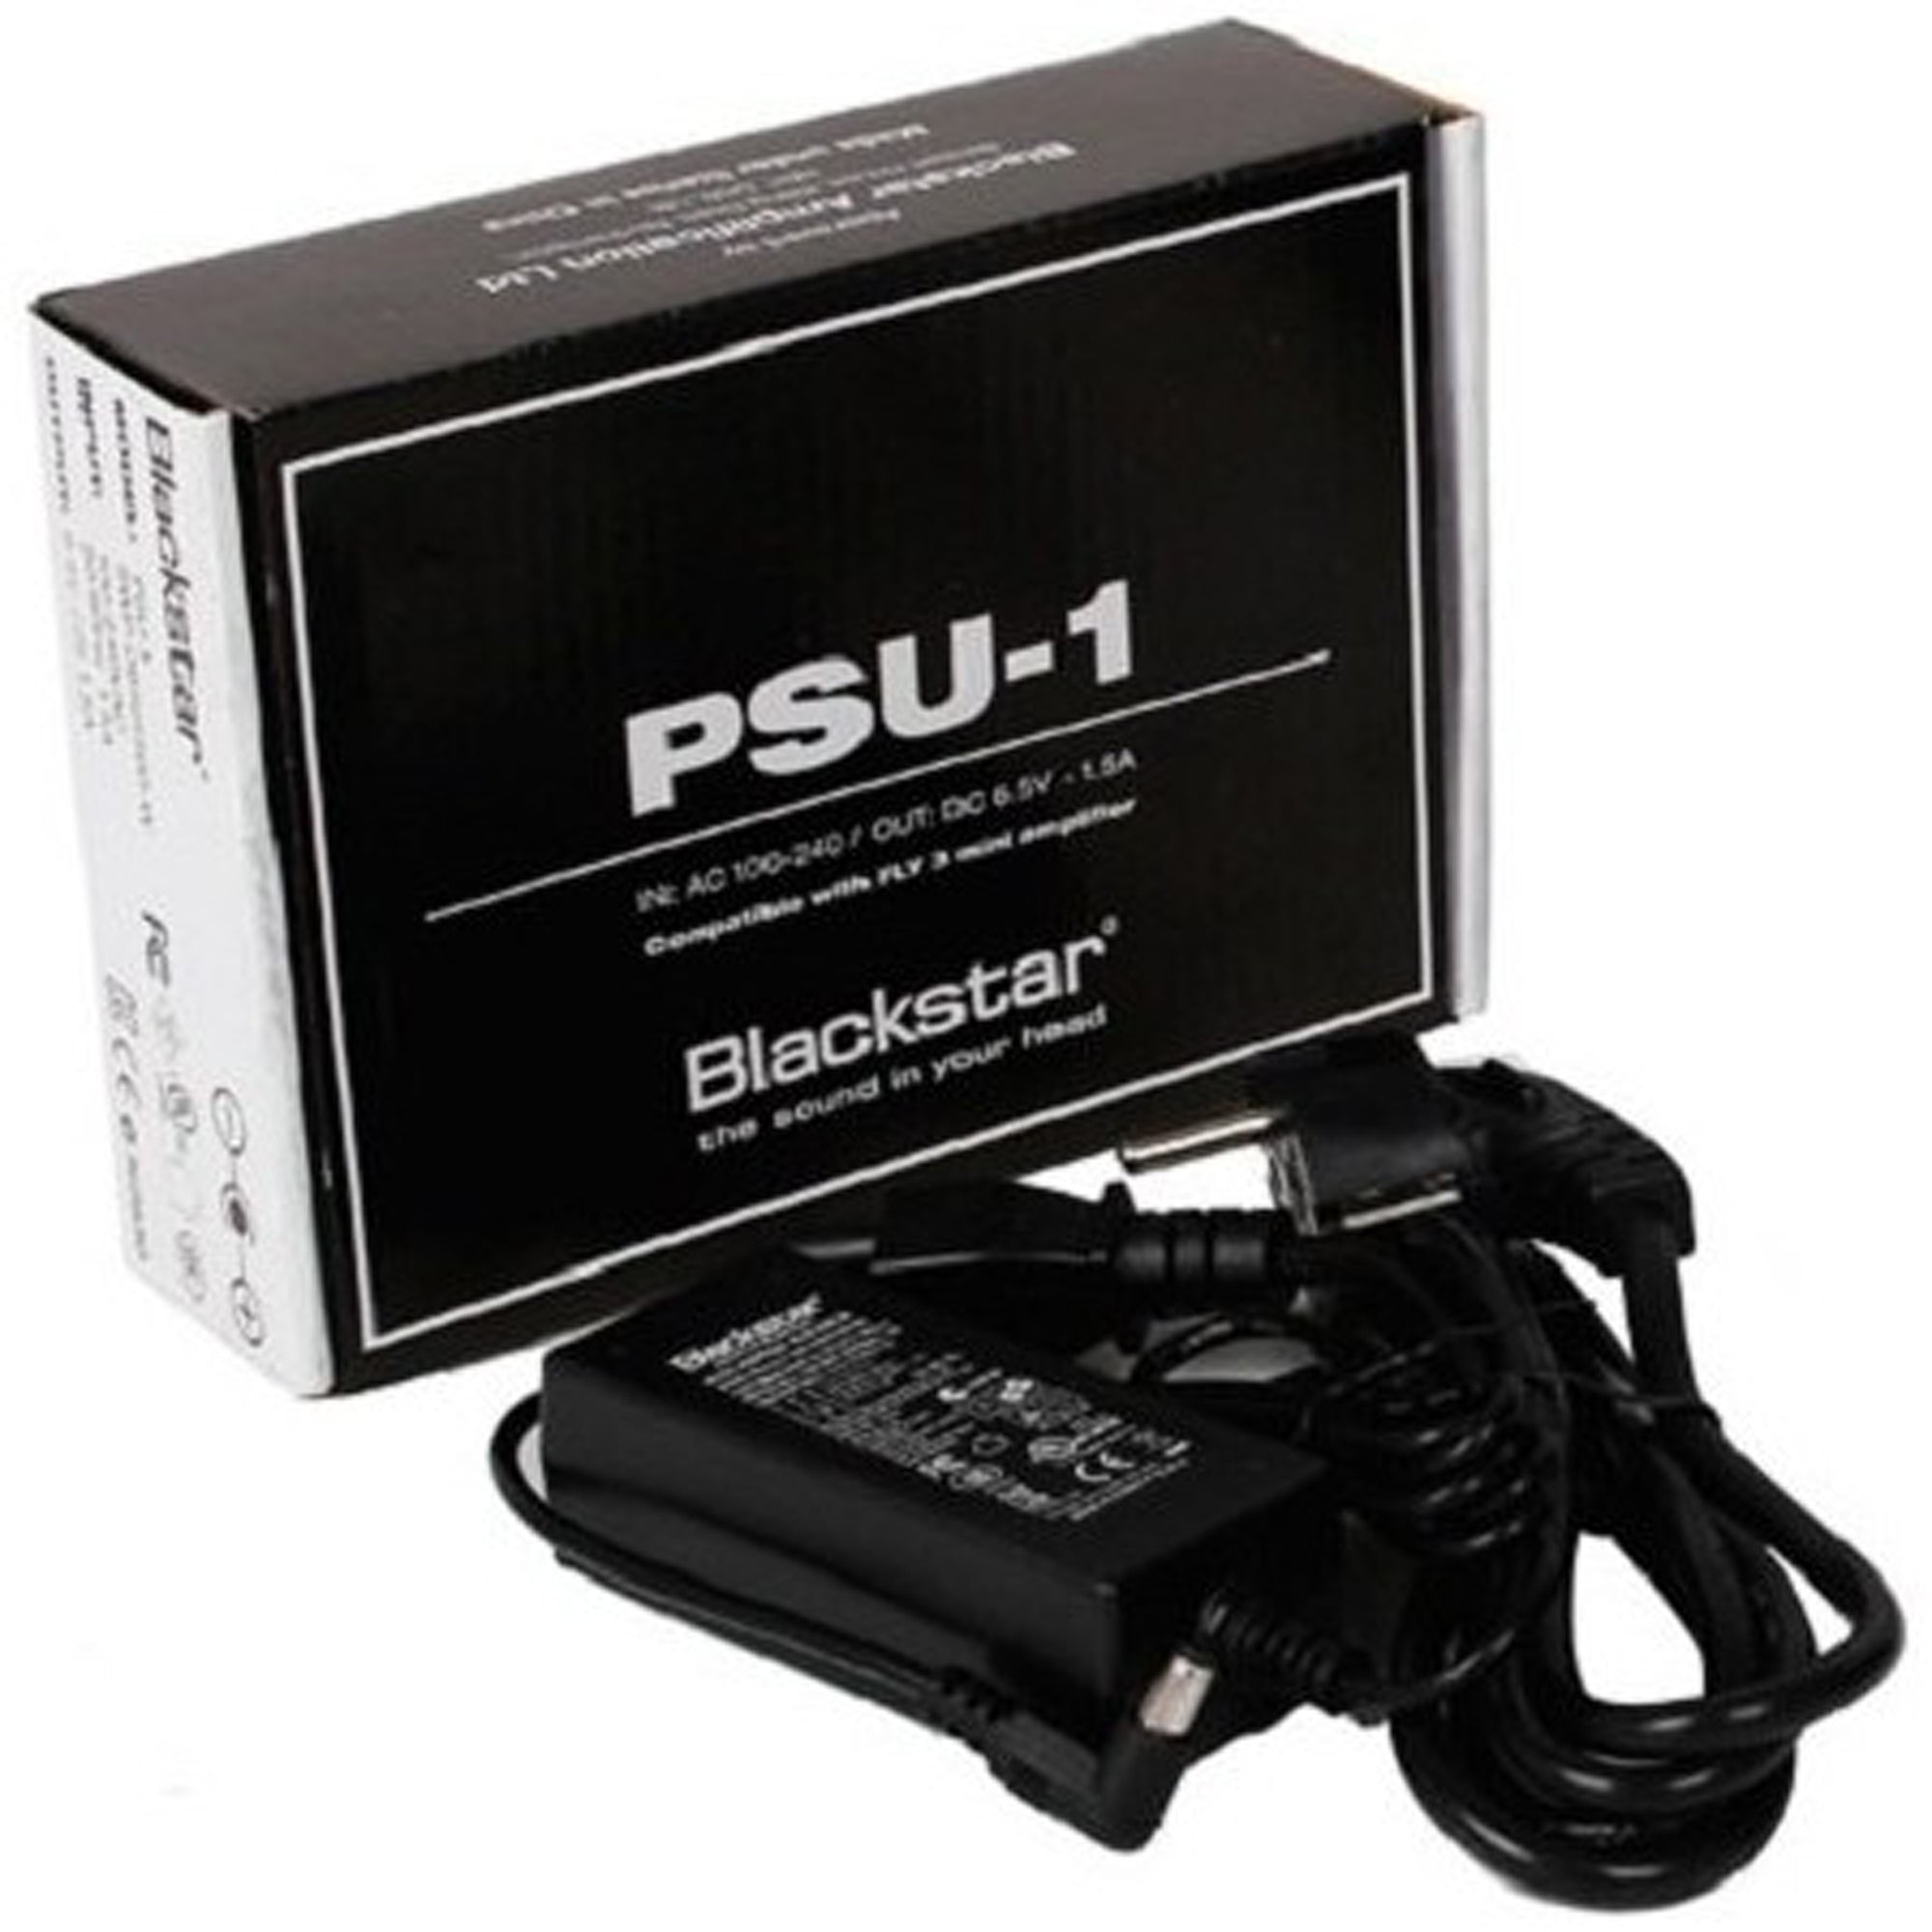 Blackstar PSU1 Fly3 Power Supply